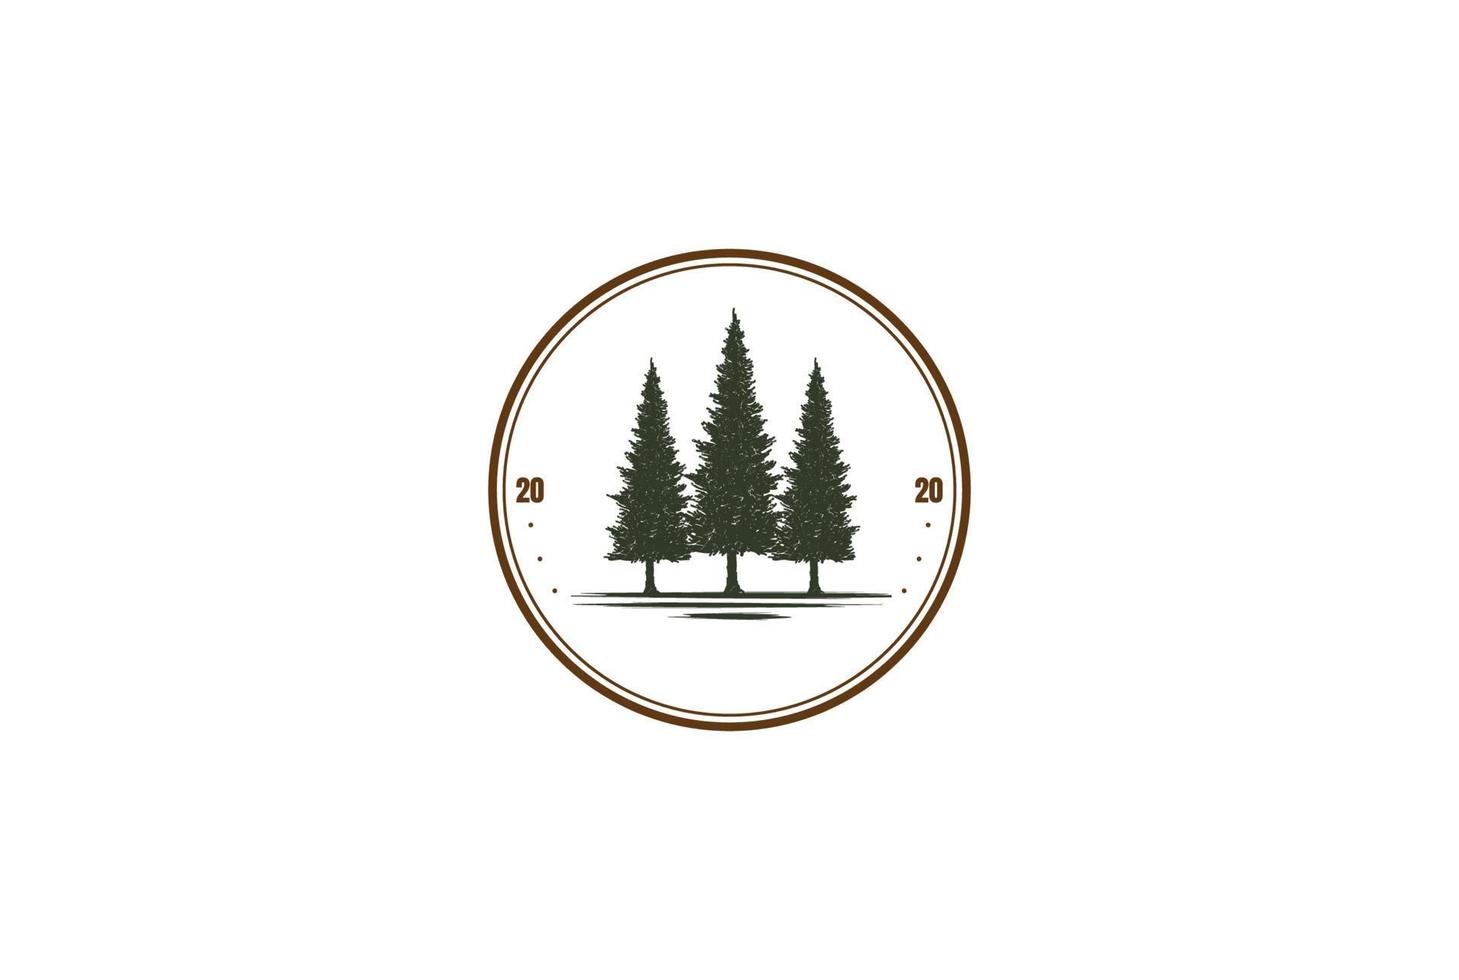 Rustic Pine Evergreen Cedar Cypress Larch Conifer Coniferous Fir Trees Forest Badge Emblem Logo Design Vector